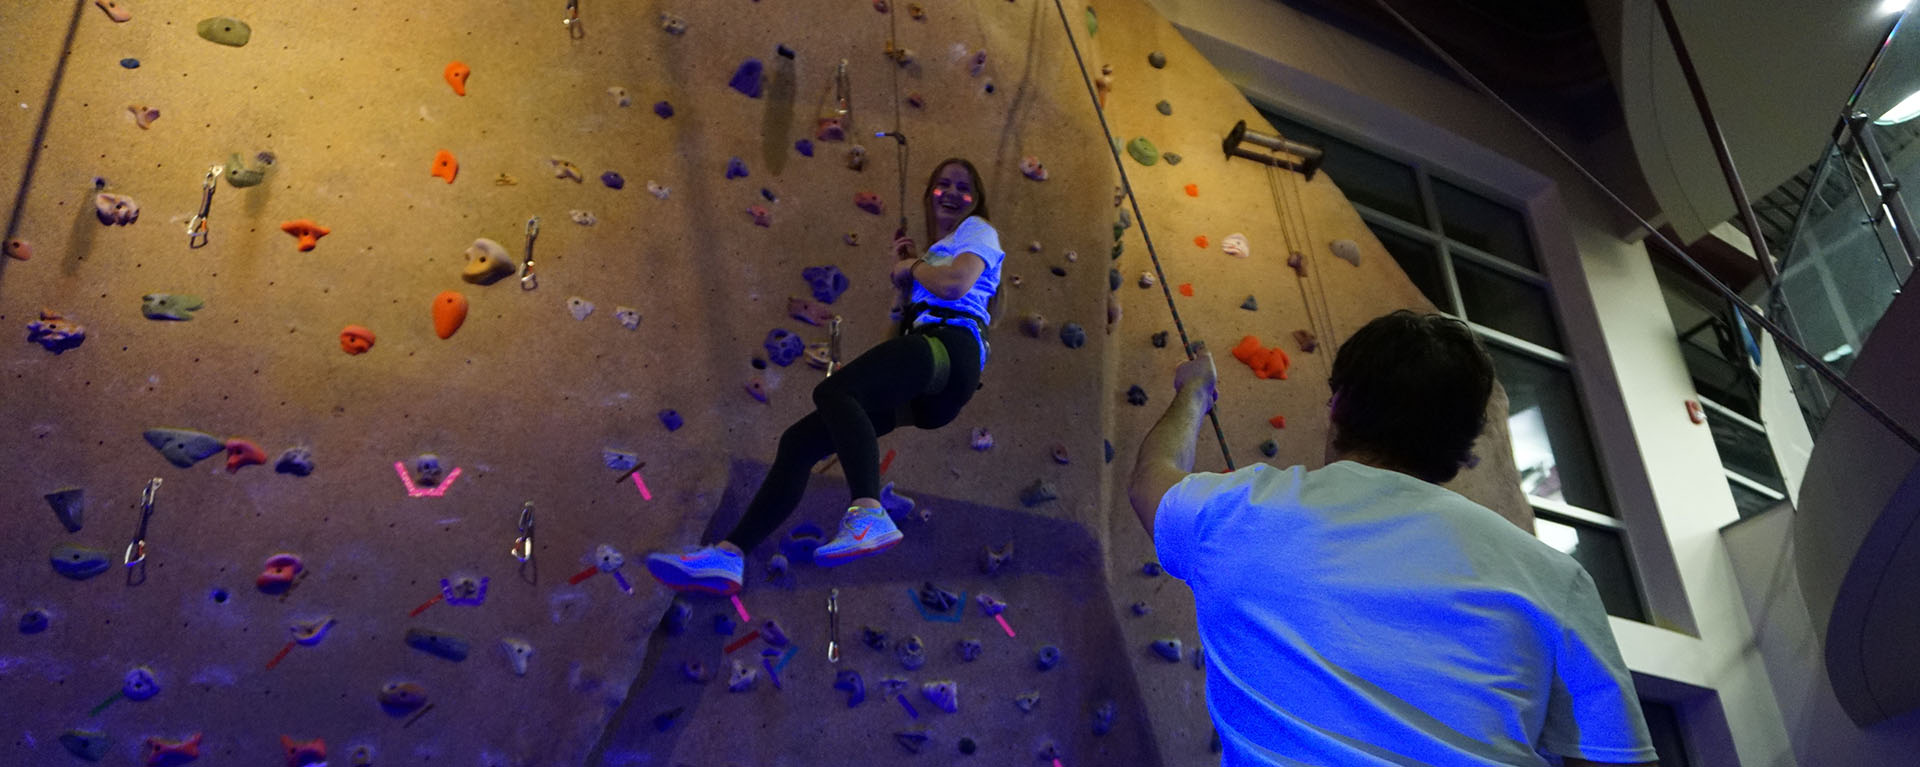 woman climbing wall